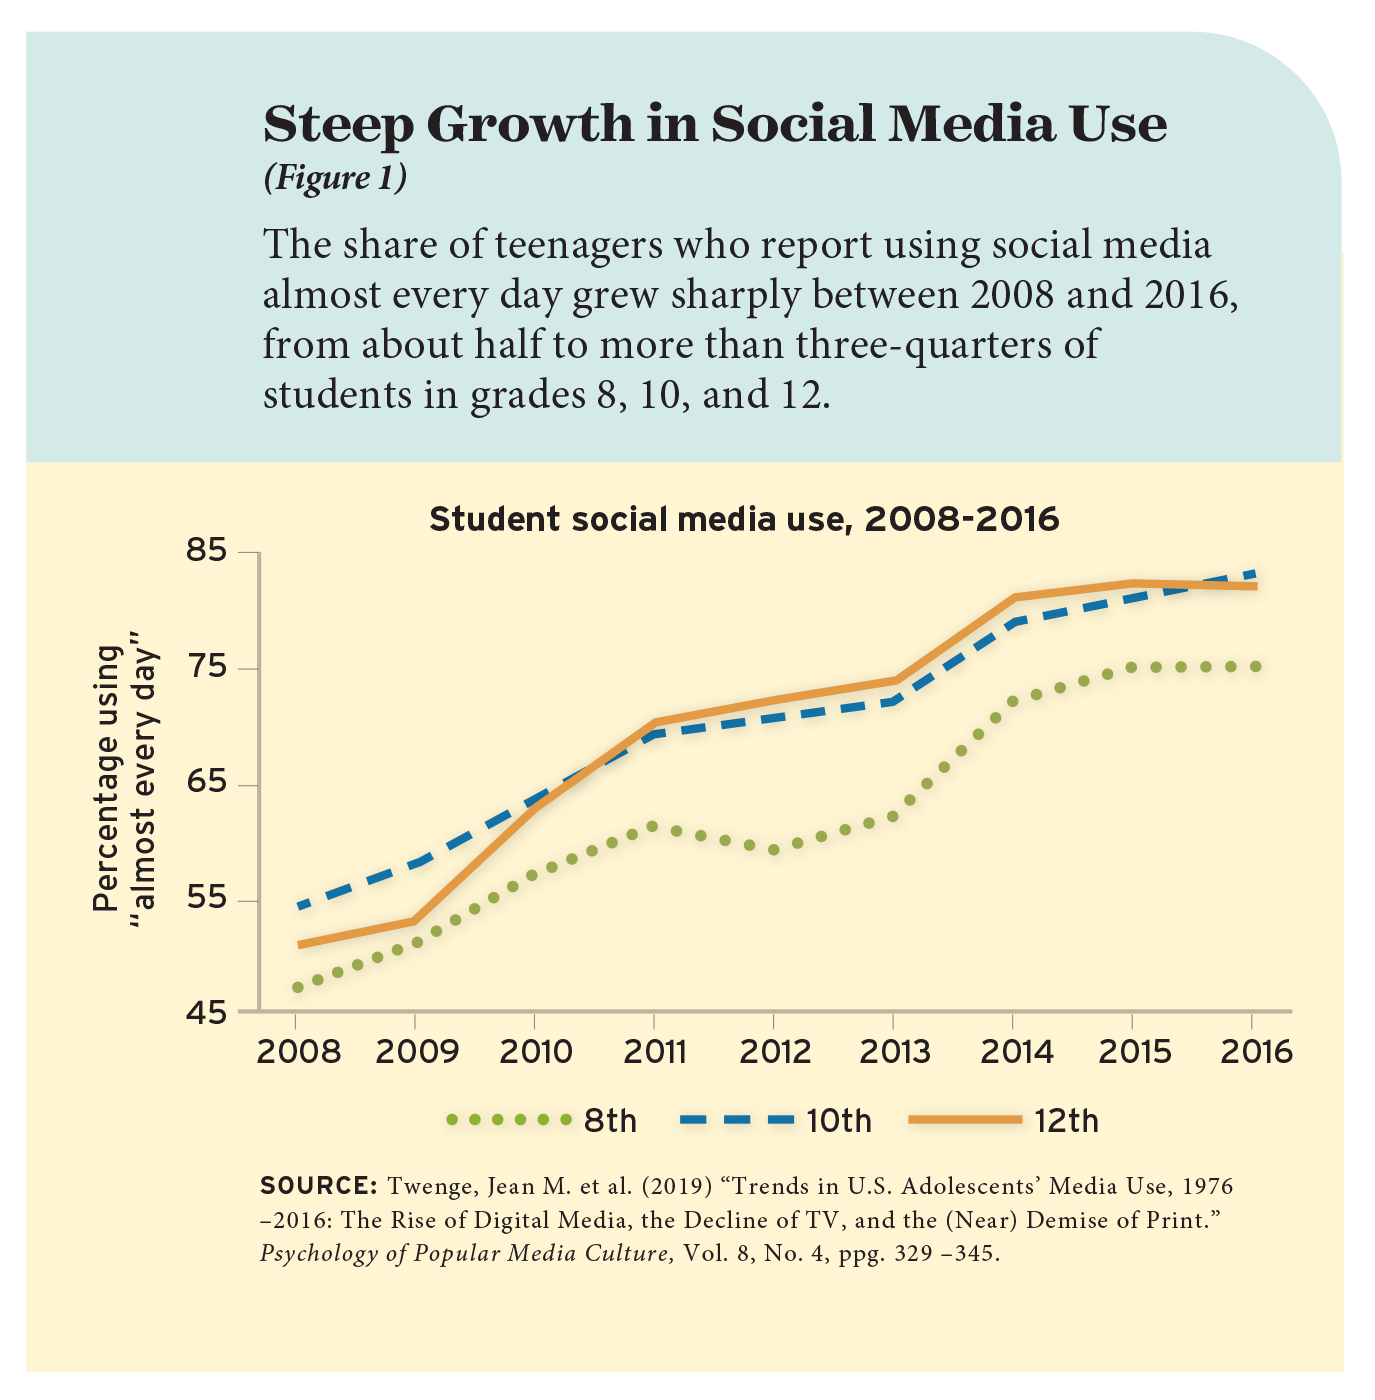 Steep Growth in Social Media Use (Figure 1)